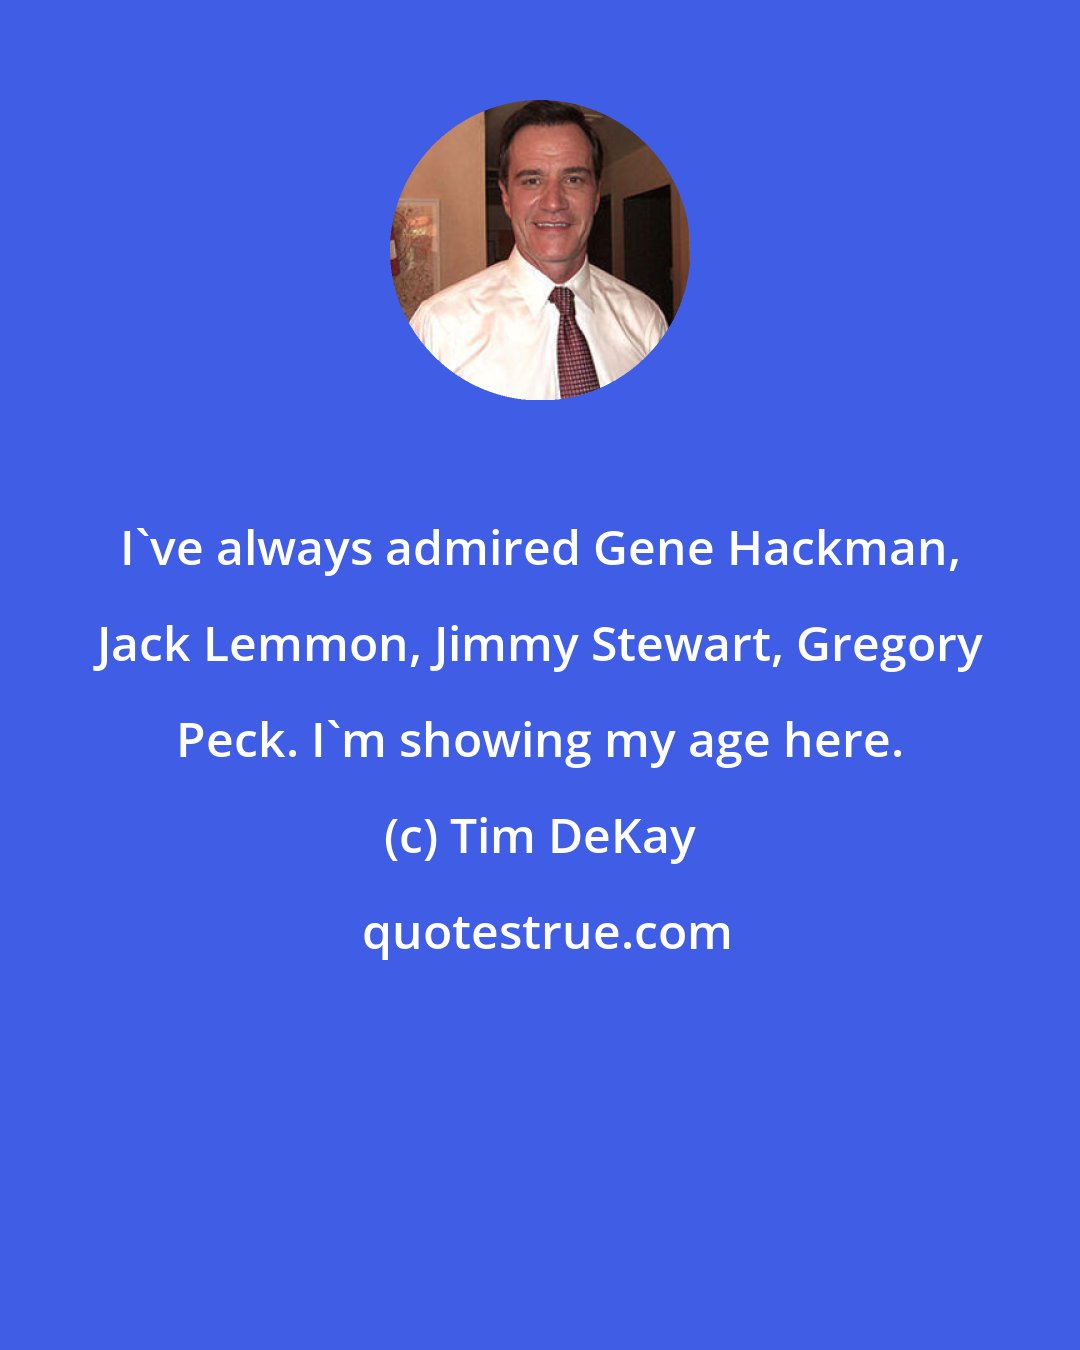 Tim DeKay: I've always admired Gene Hackman, Jack Lemmon, Jimmy Stewart, Gregory Peck. I'm showing my age here.